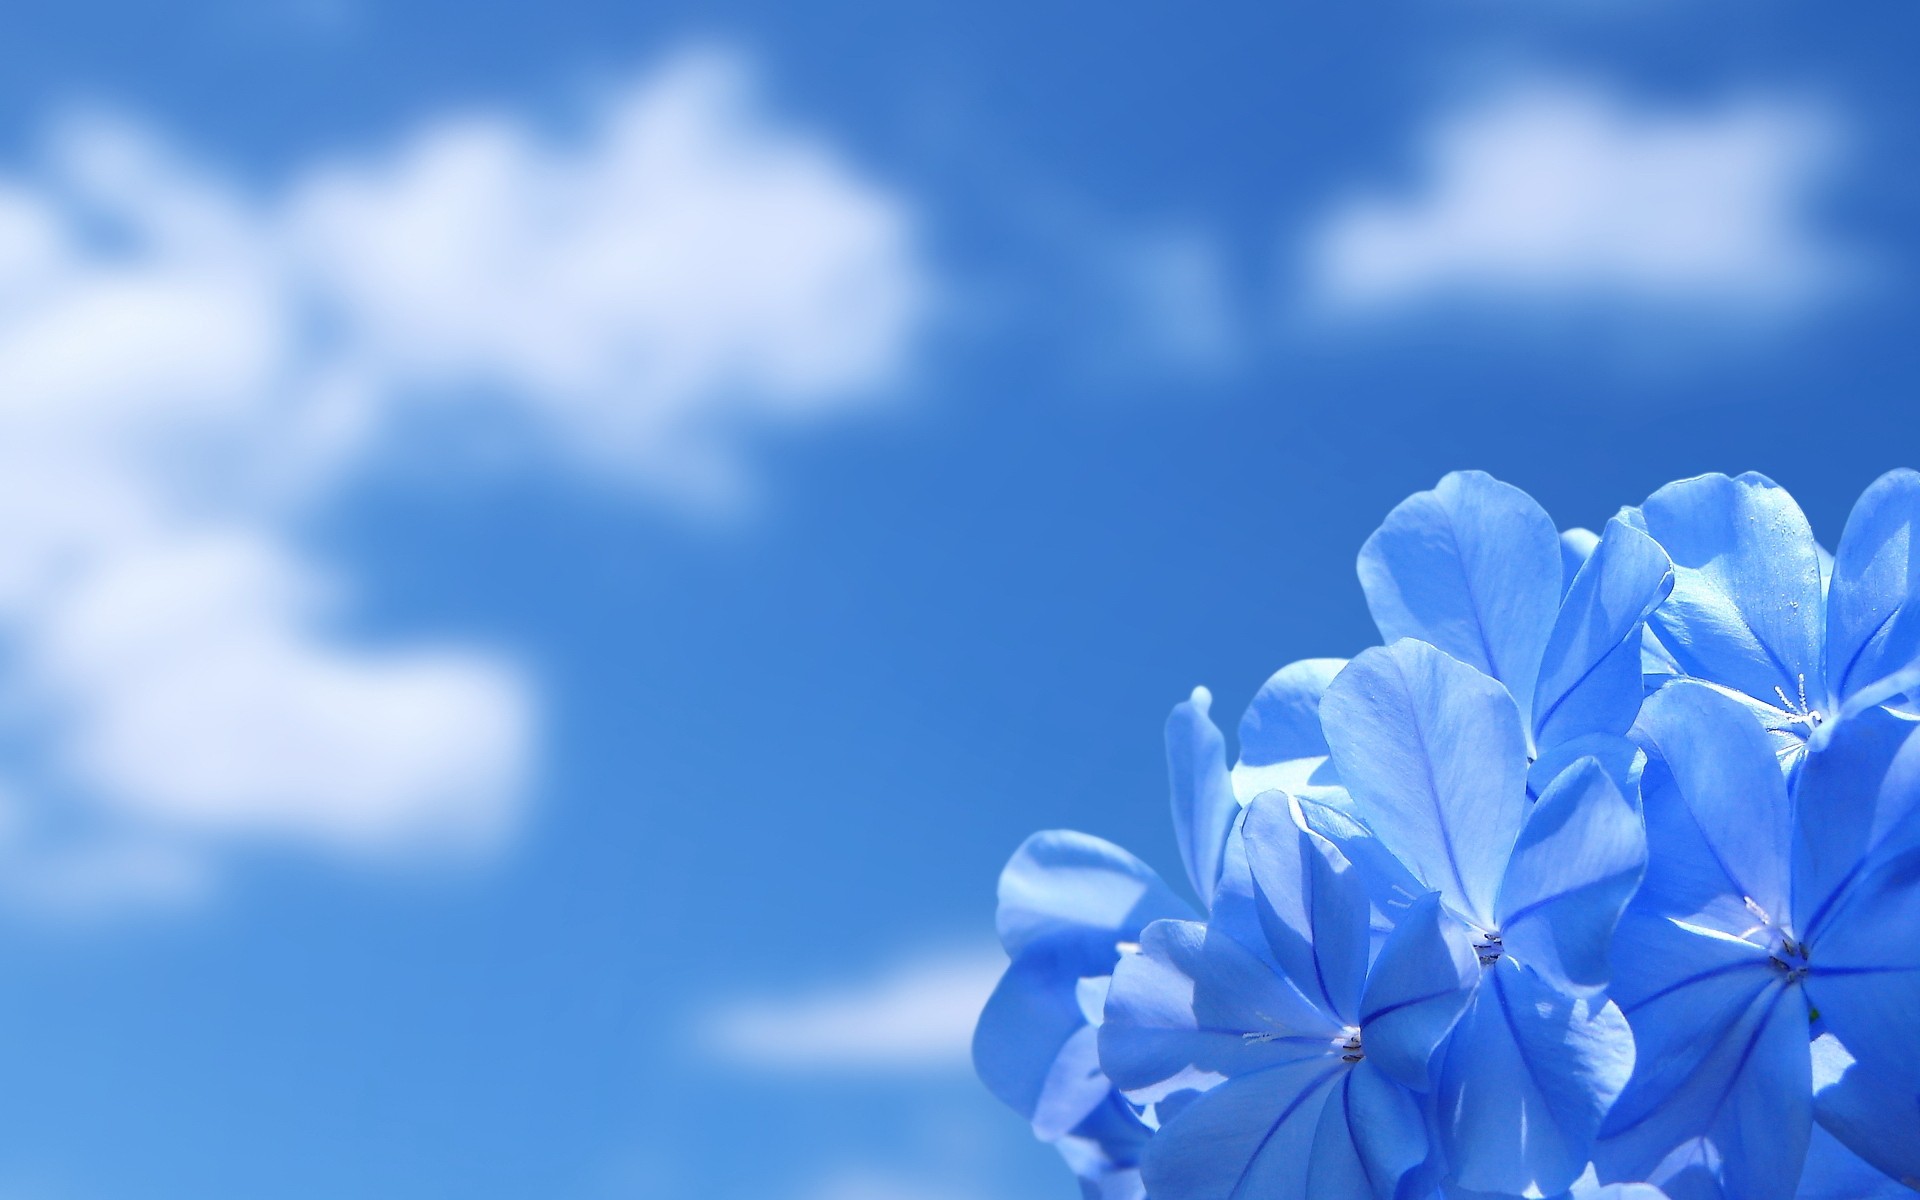 Free Desktop Backgrounds Of Flowers Hd Blue Flower For Mobile Phones ...